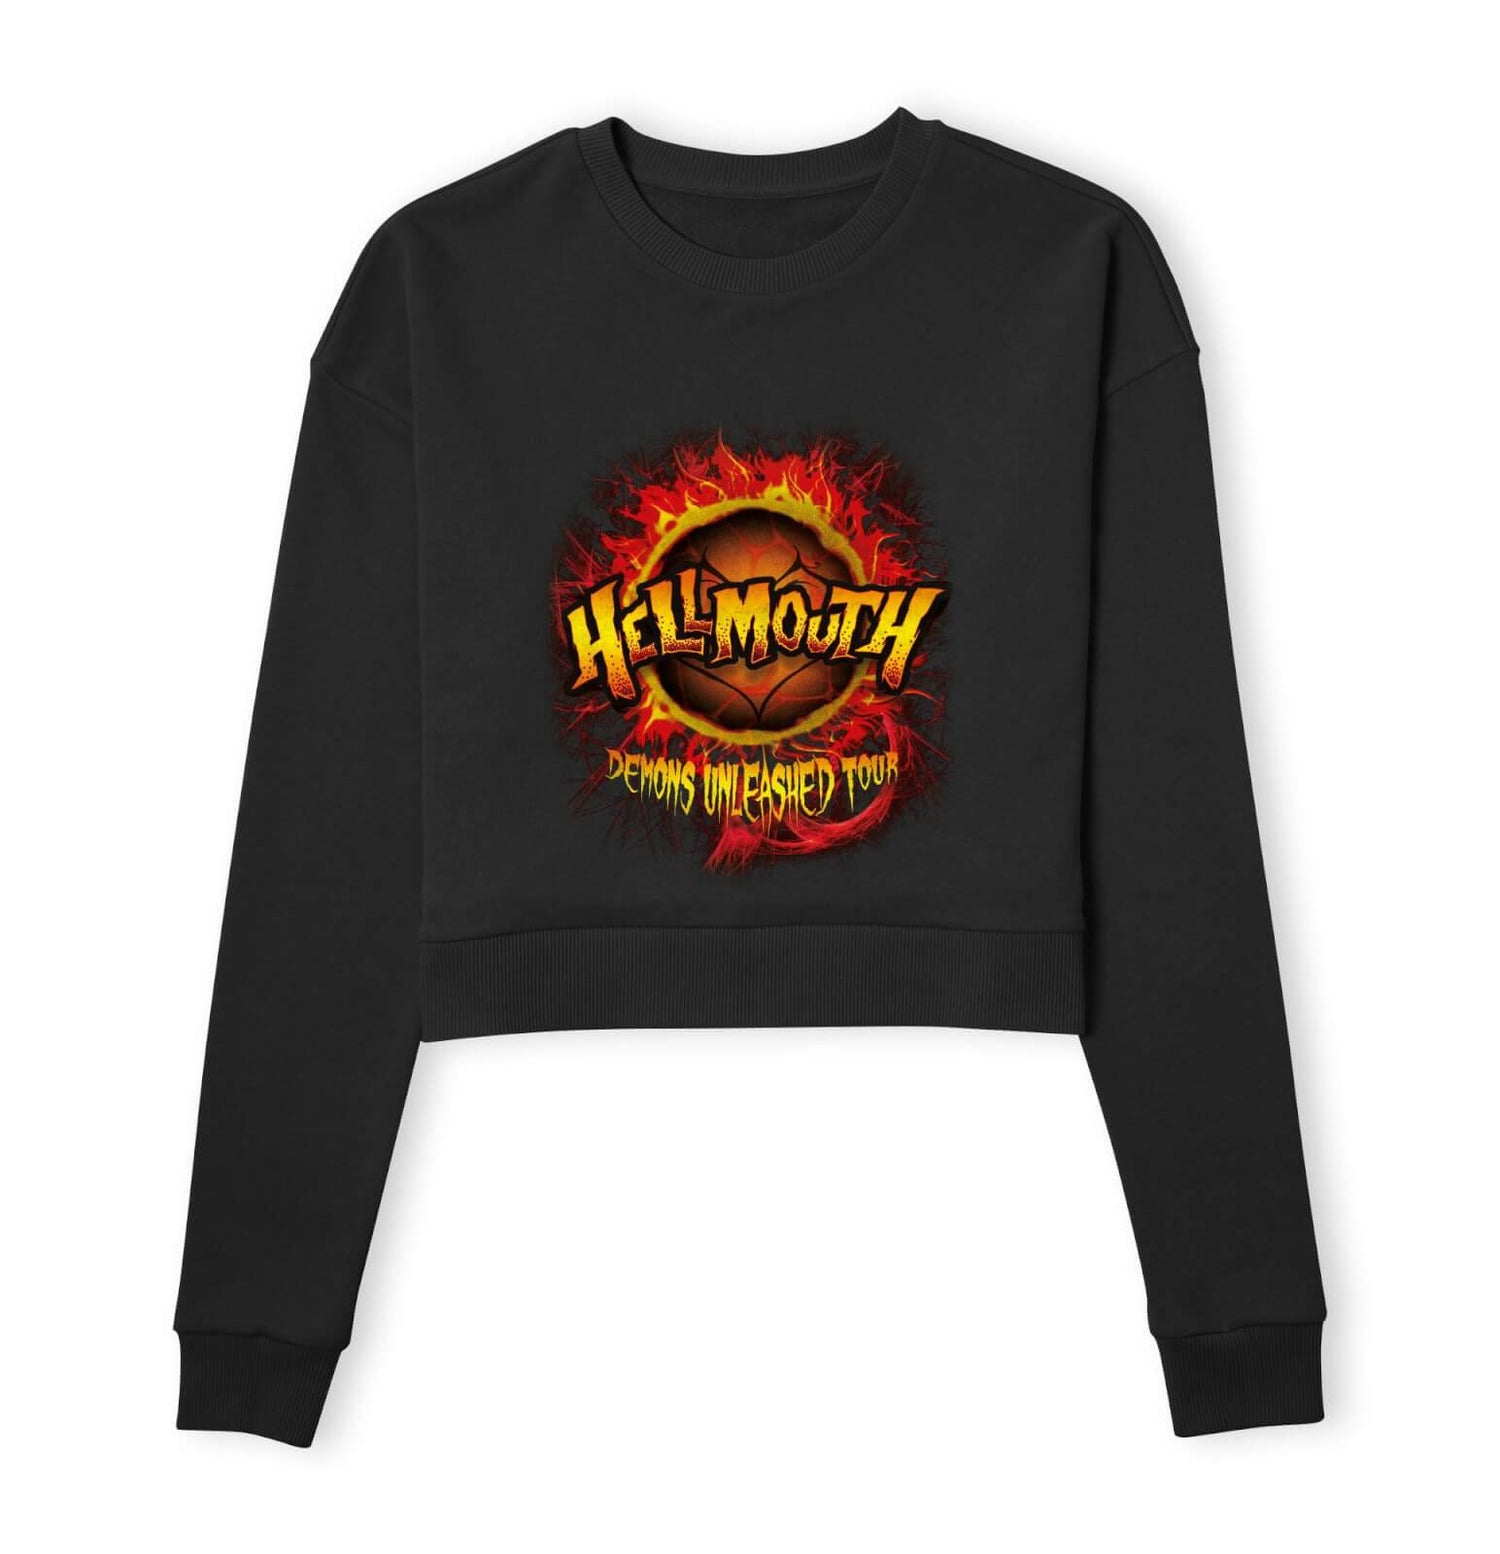 Buffy The Vampire Slayer Hellmouth Tour Women's Cropped Sweatshirt - Black